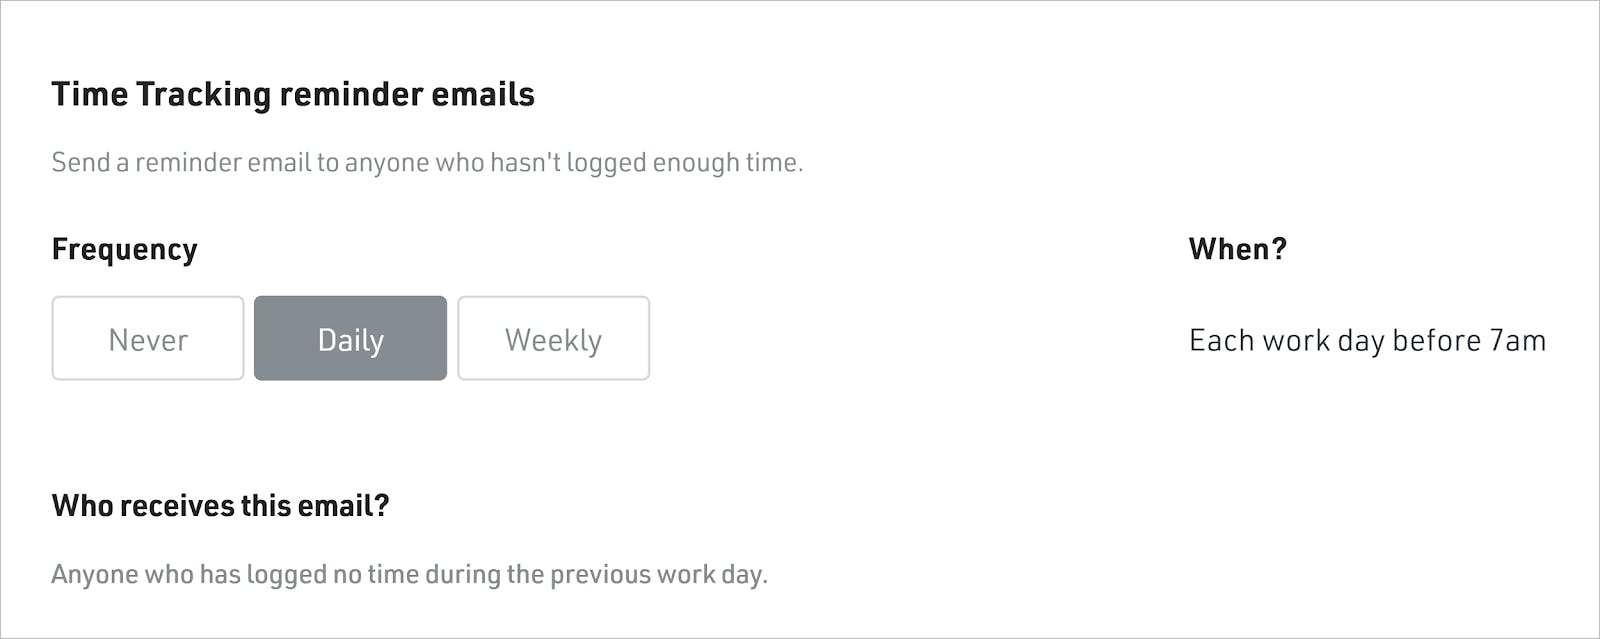 Time Tracking Reminder Emails